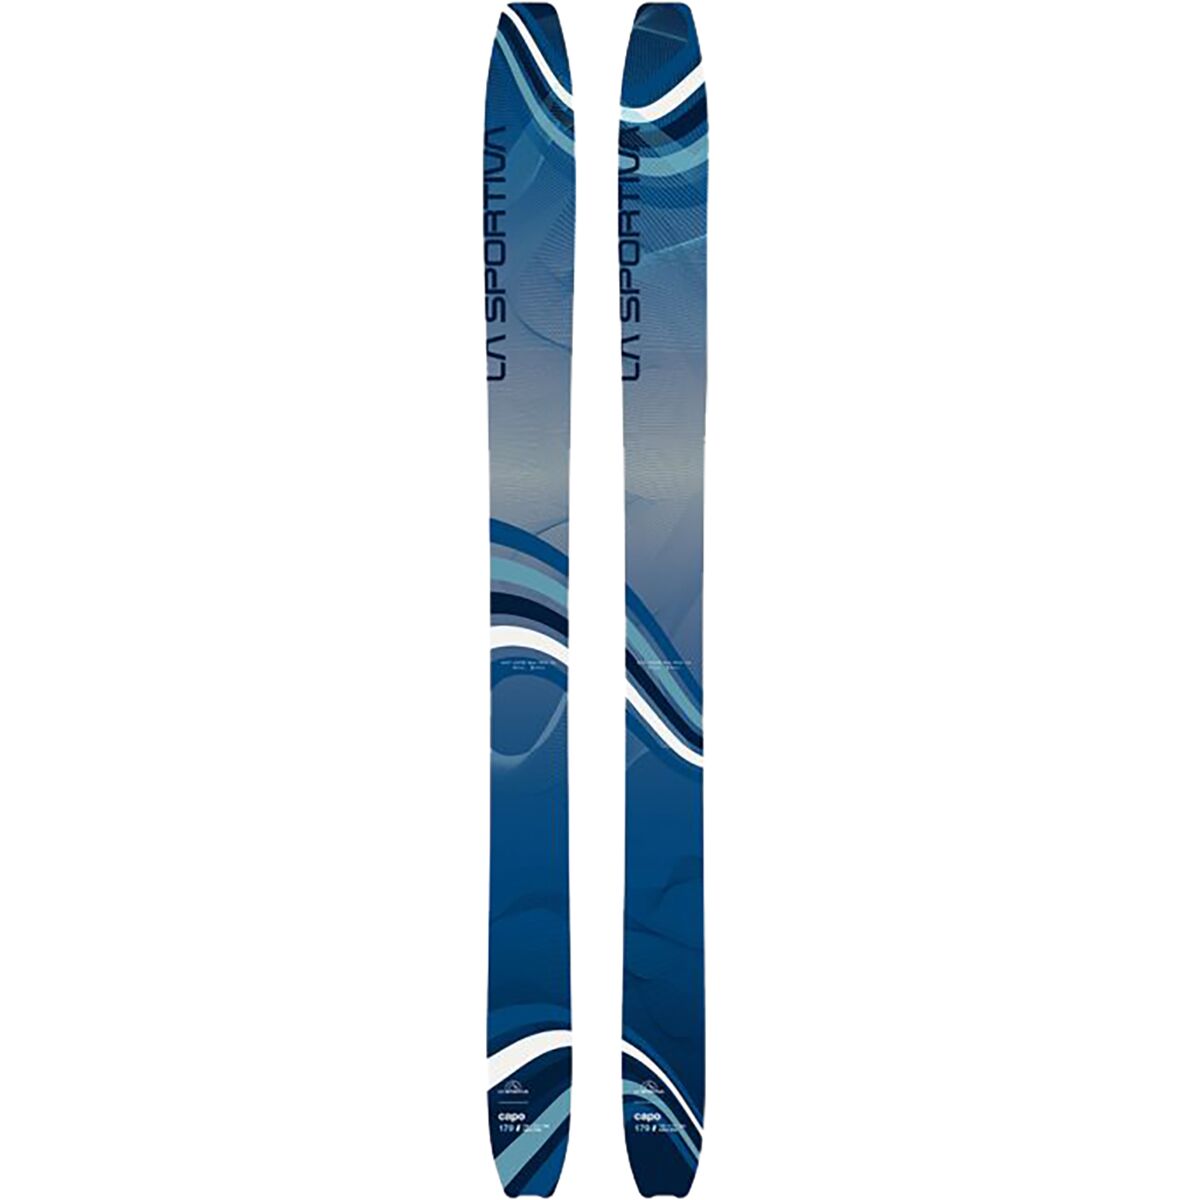 La Sportiva Capo Ski - 2022